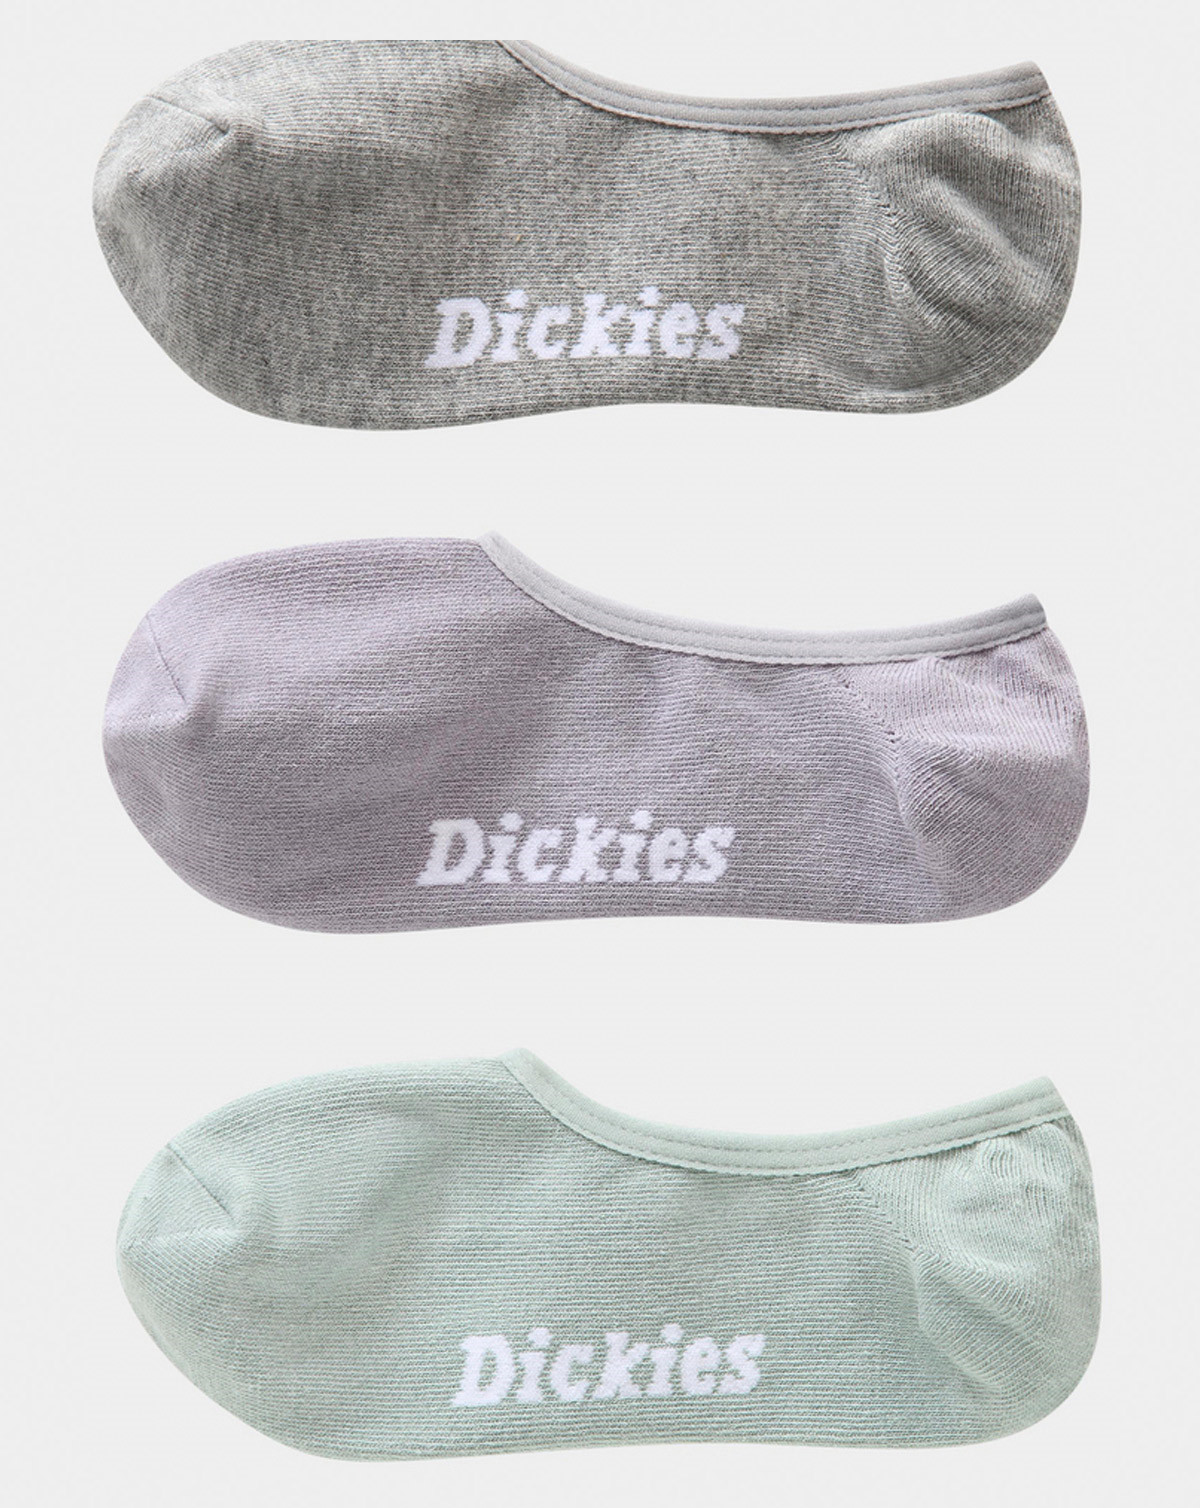 6: Dickies Invisible Socks - 3 Pack (Assorteret, 43-46)